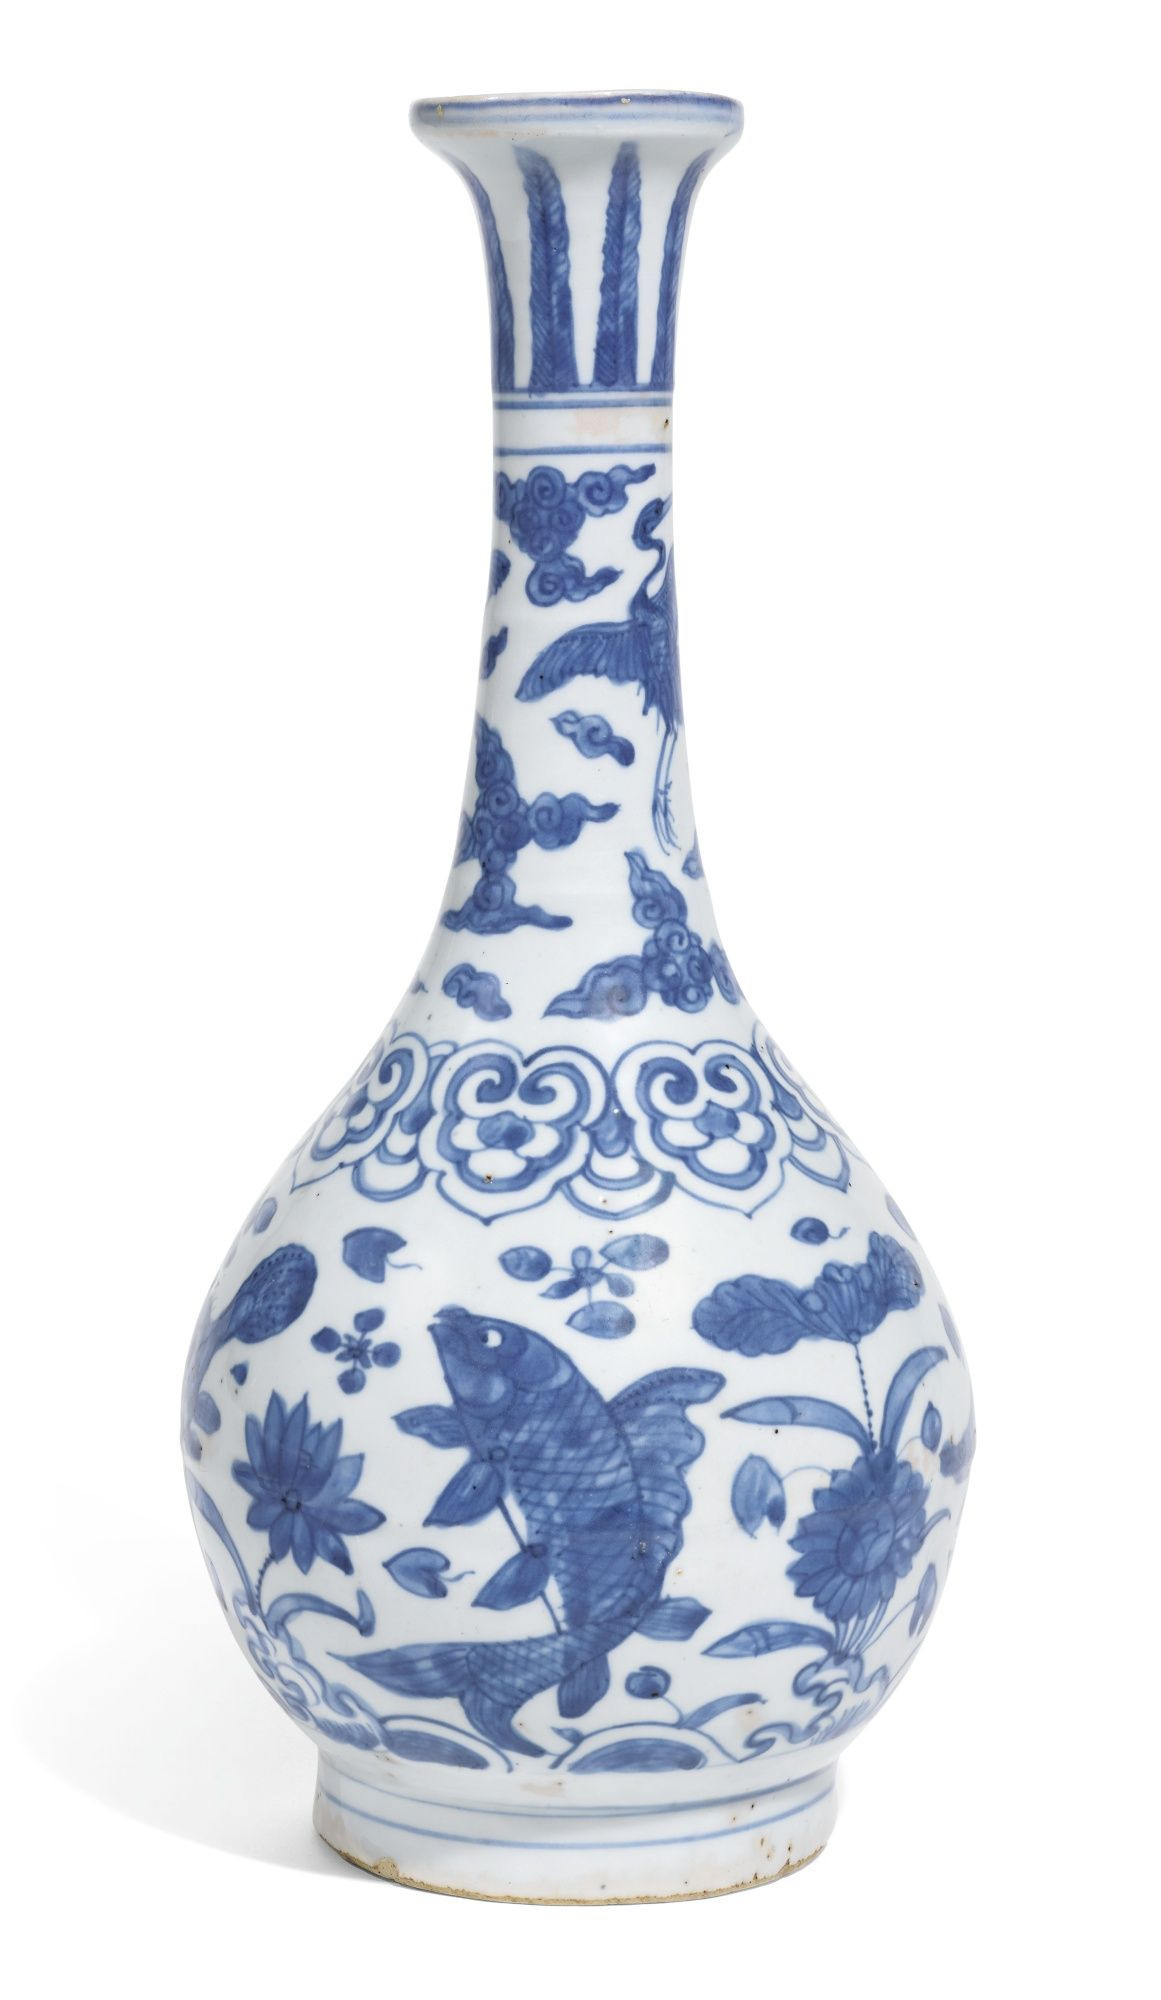 17 Lovable White Porcelain Vase 2023 free download white porcelain vase of a blue and white bottle vase ming dynasty jiajing wanli period inside vase a chinese blue and white porcelain